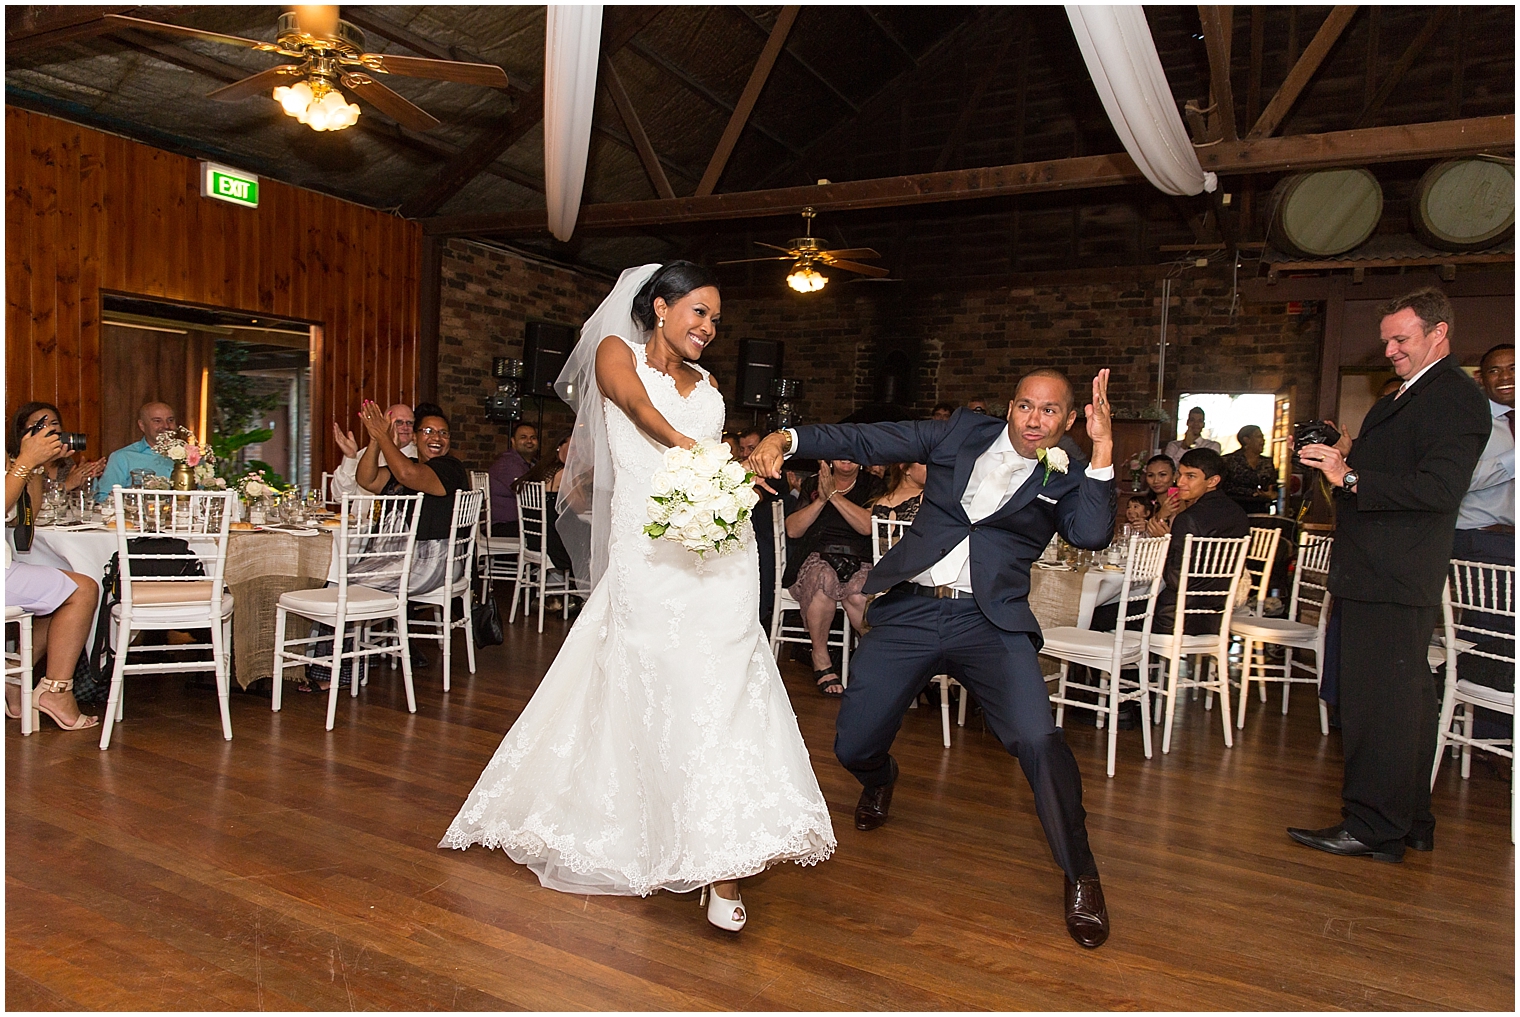 Sydney Wedding Photographer, Mr & Mrs, Bridal Dance